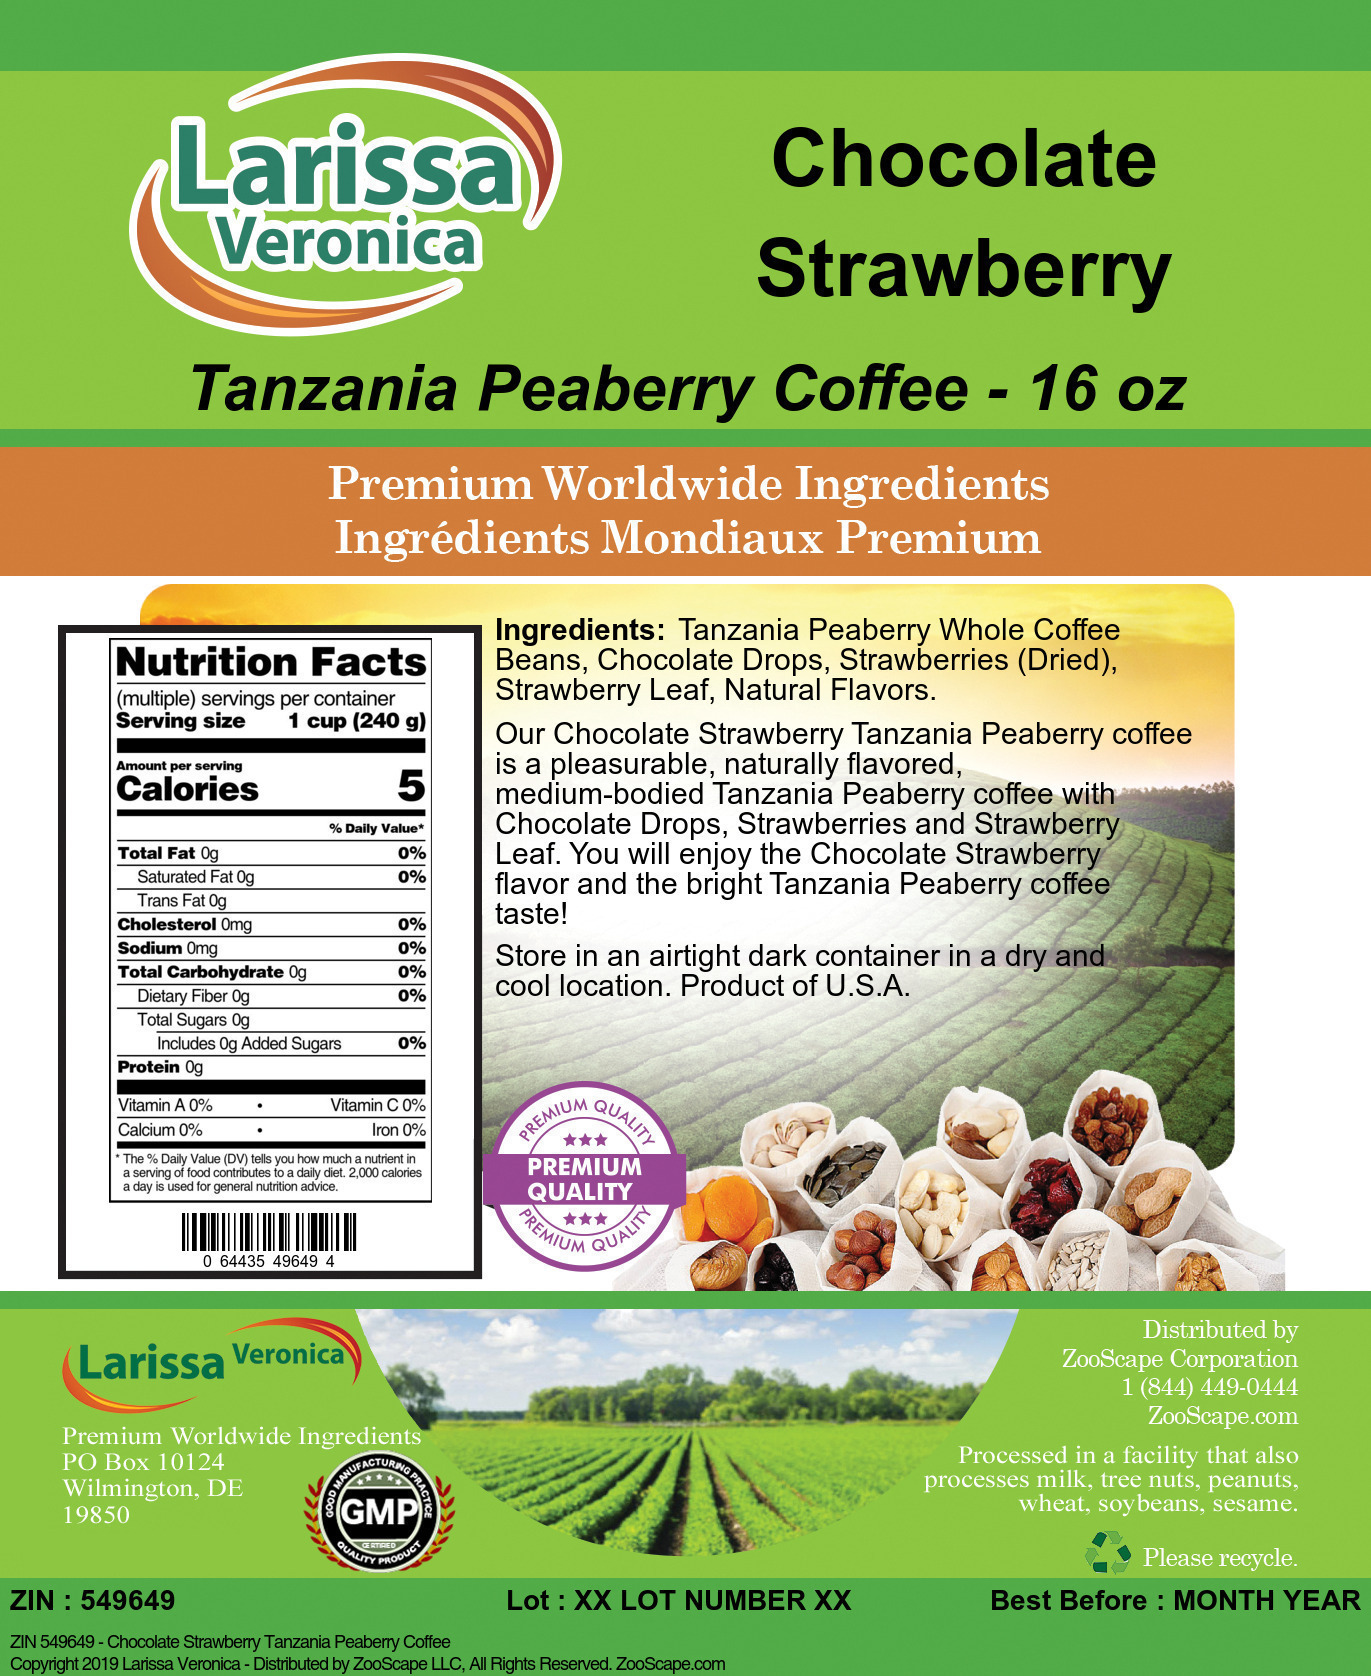 Chocolate Strawberry Tanzania Peaberry Coffee - Label